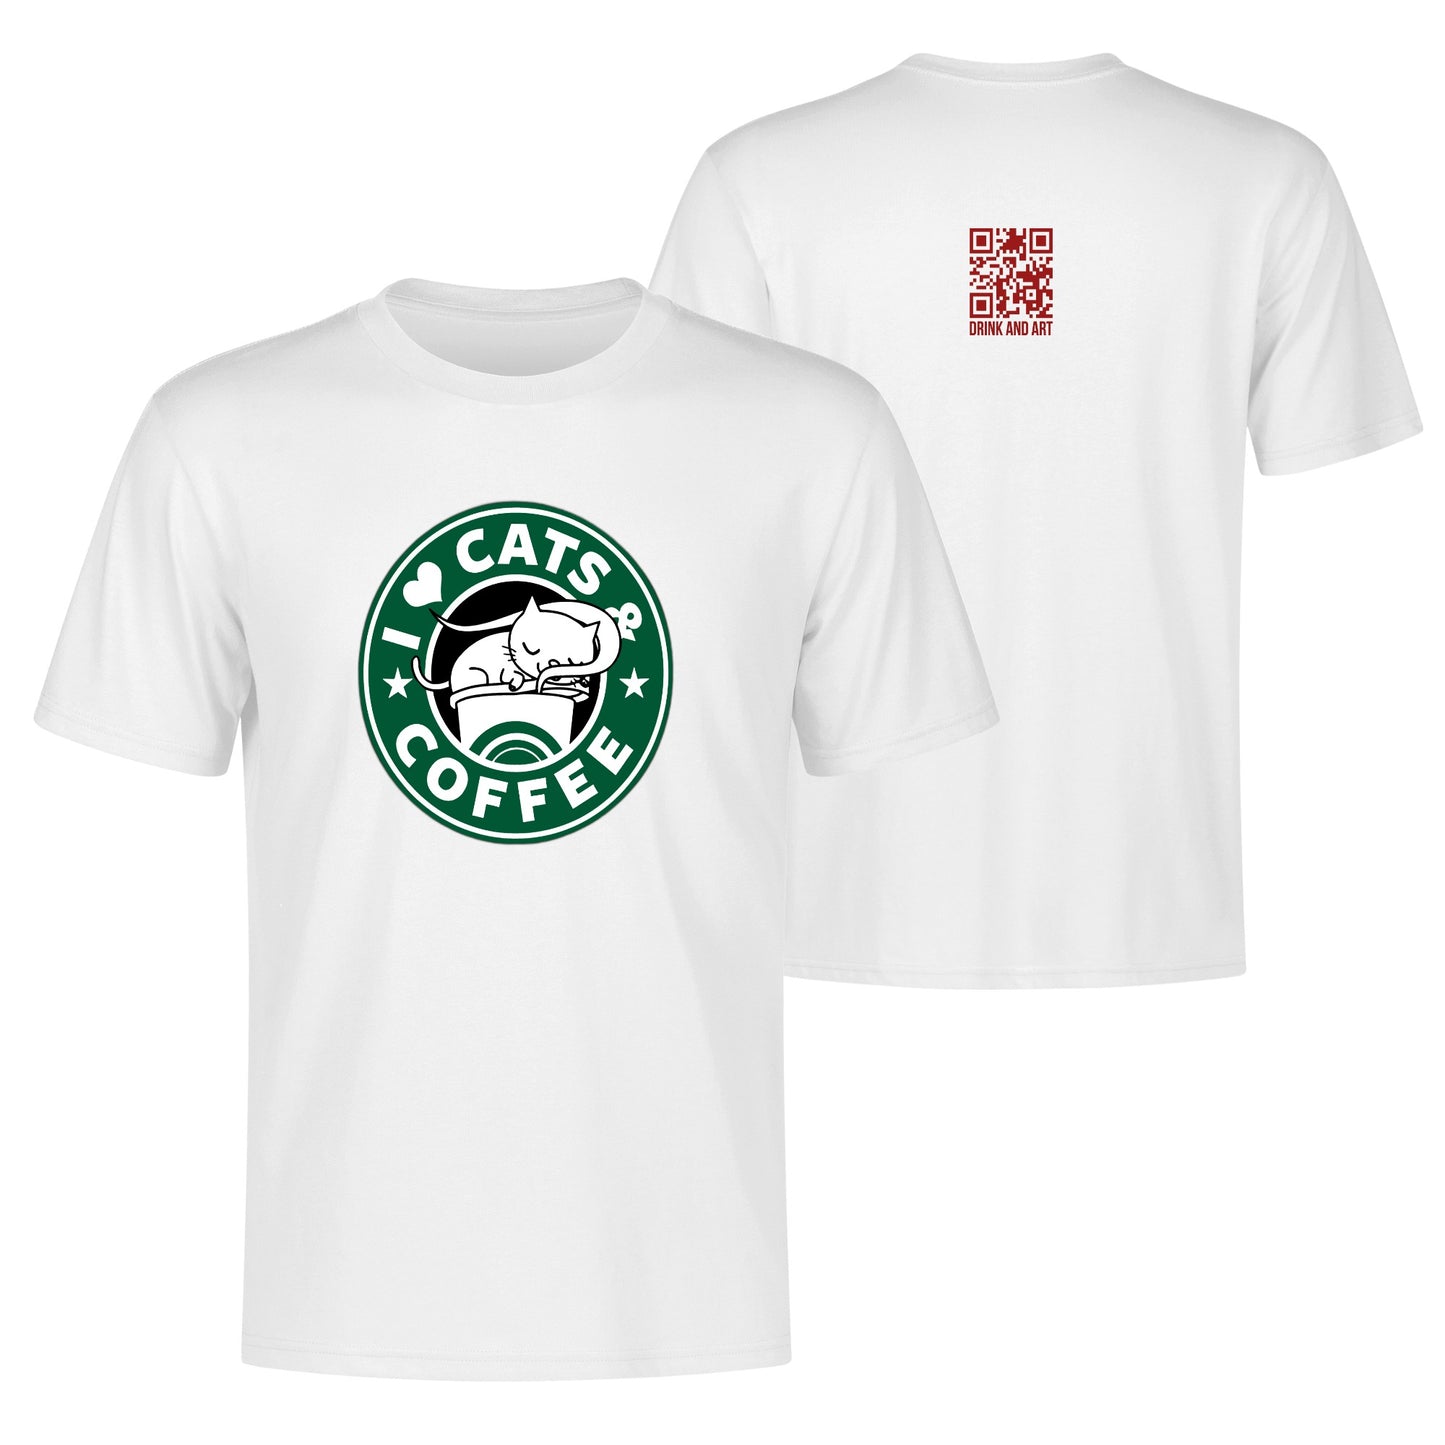 T-Shirt i love cats and coffee DrinkandArt